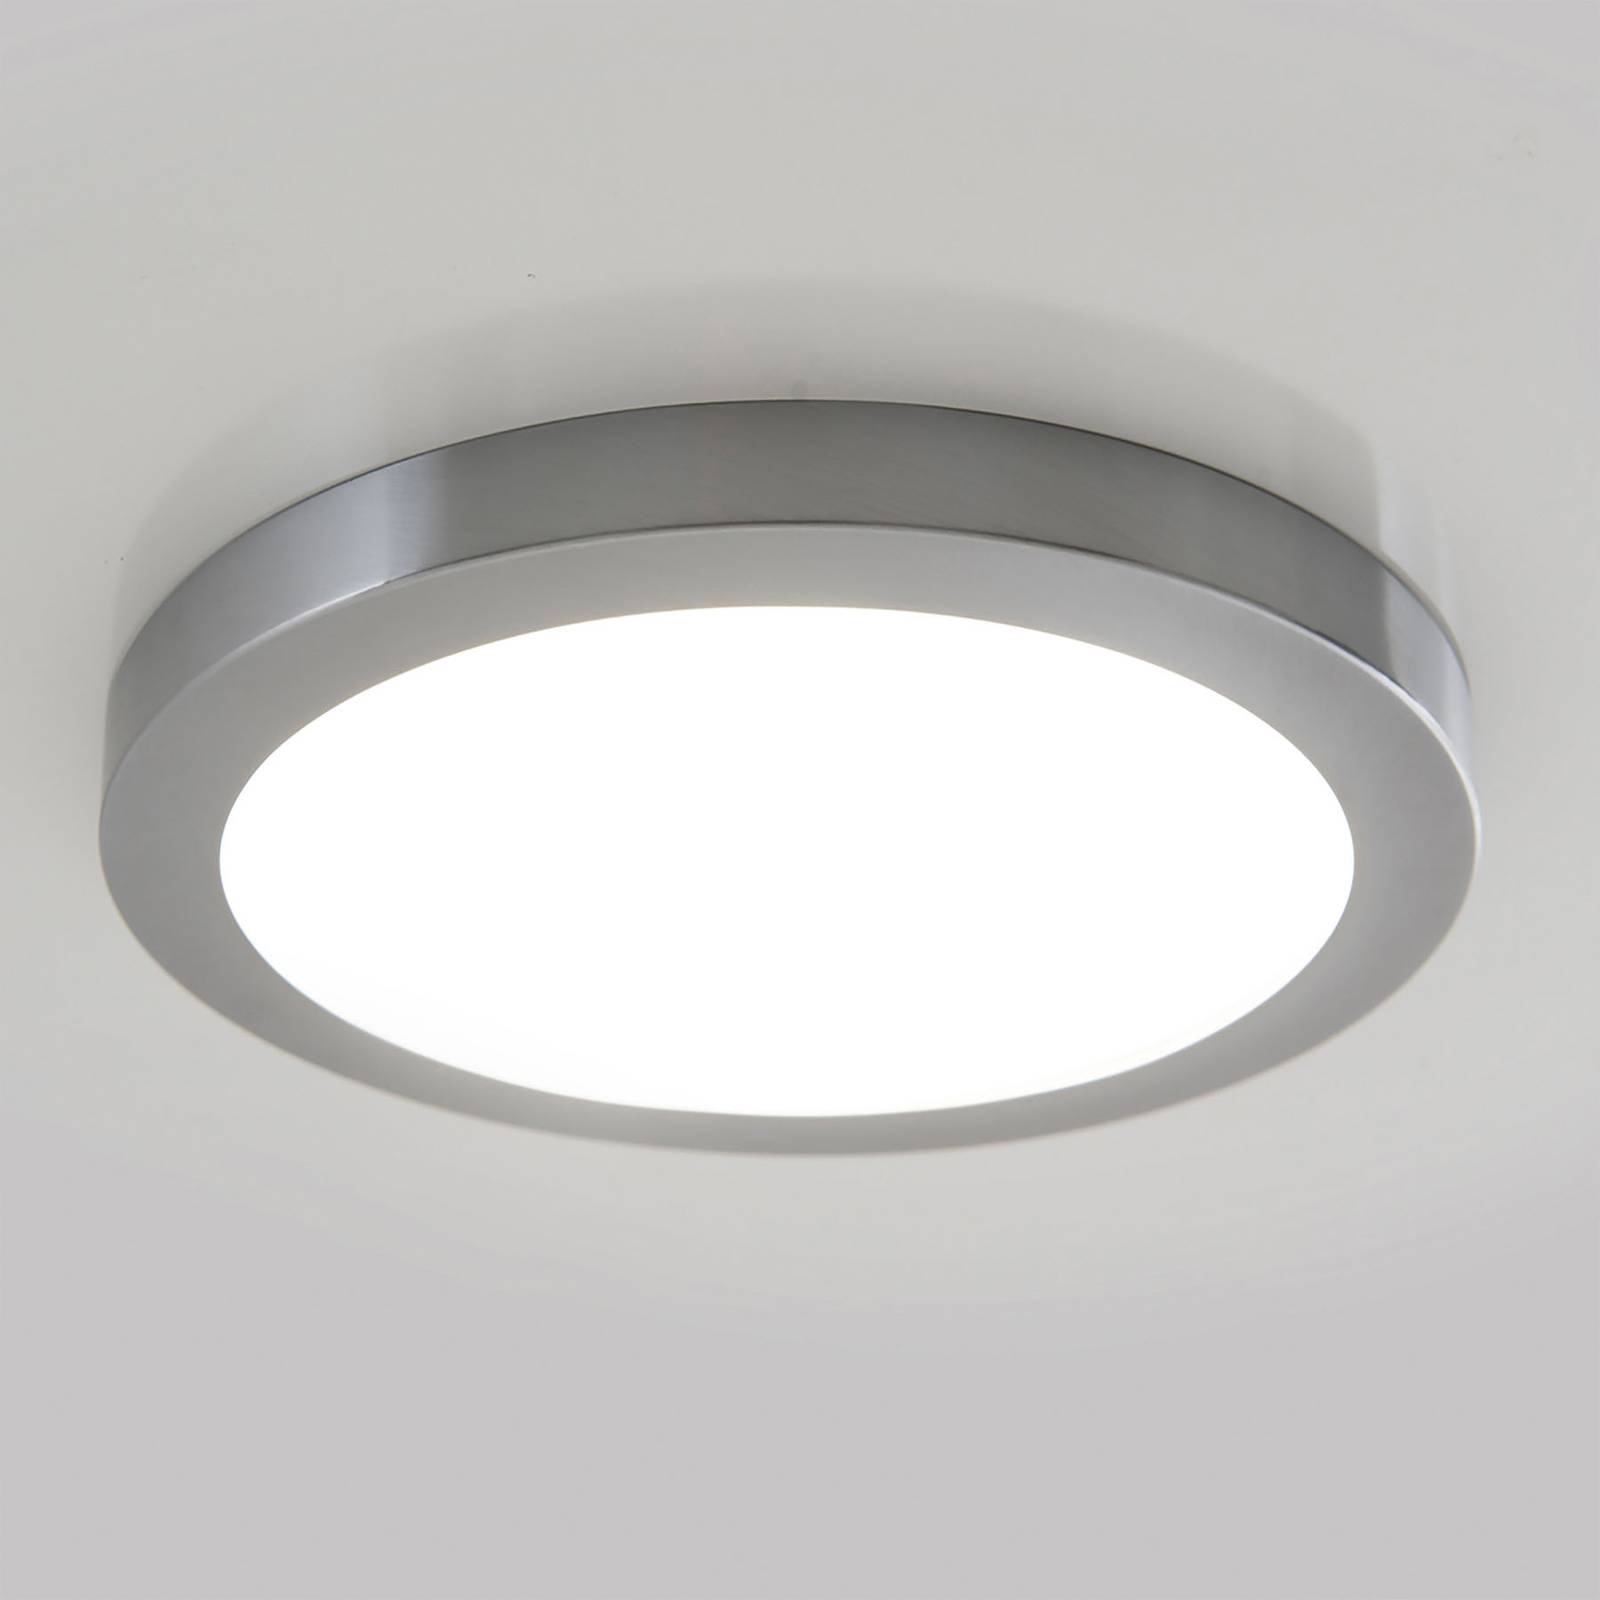 Lampa sufitowa LED Bonus magnes, Ø 22,5 cm